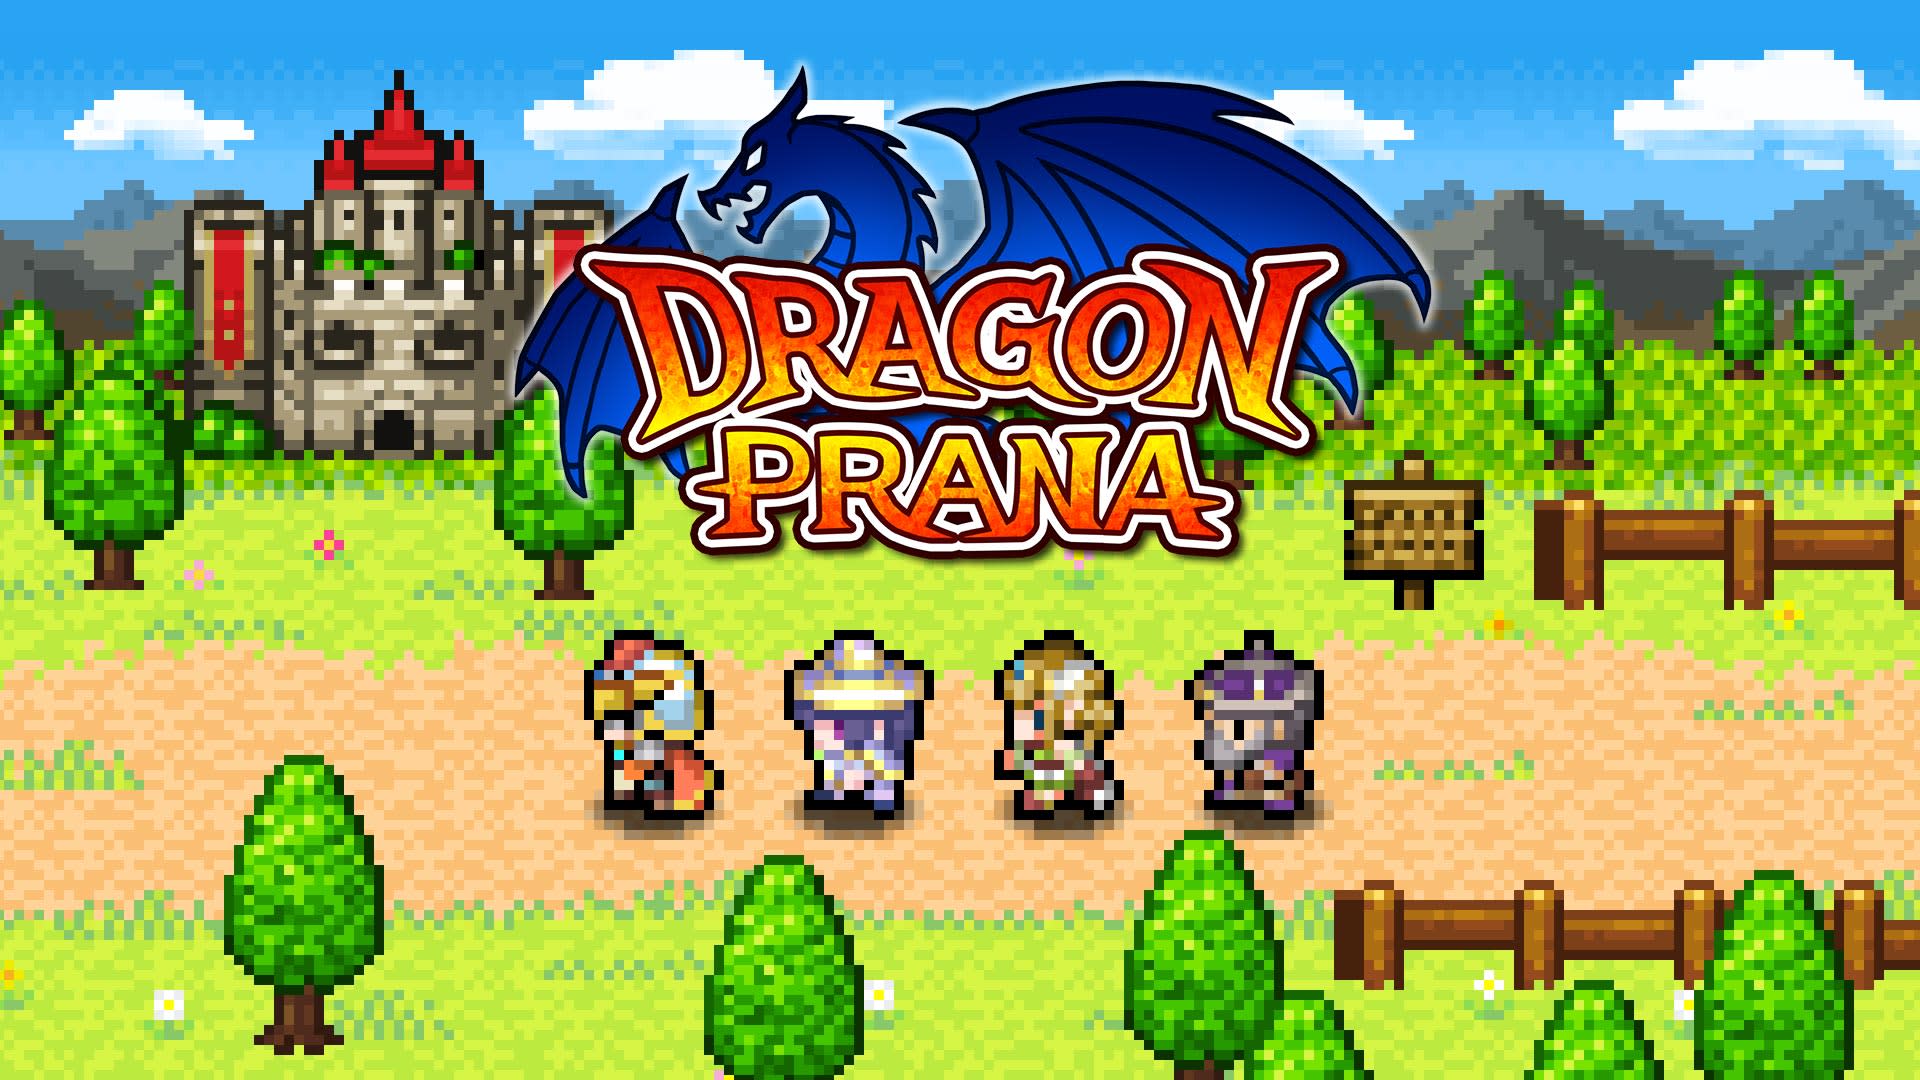 Dragon Prana